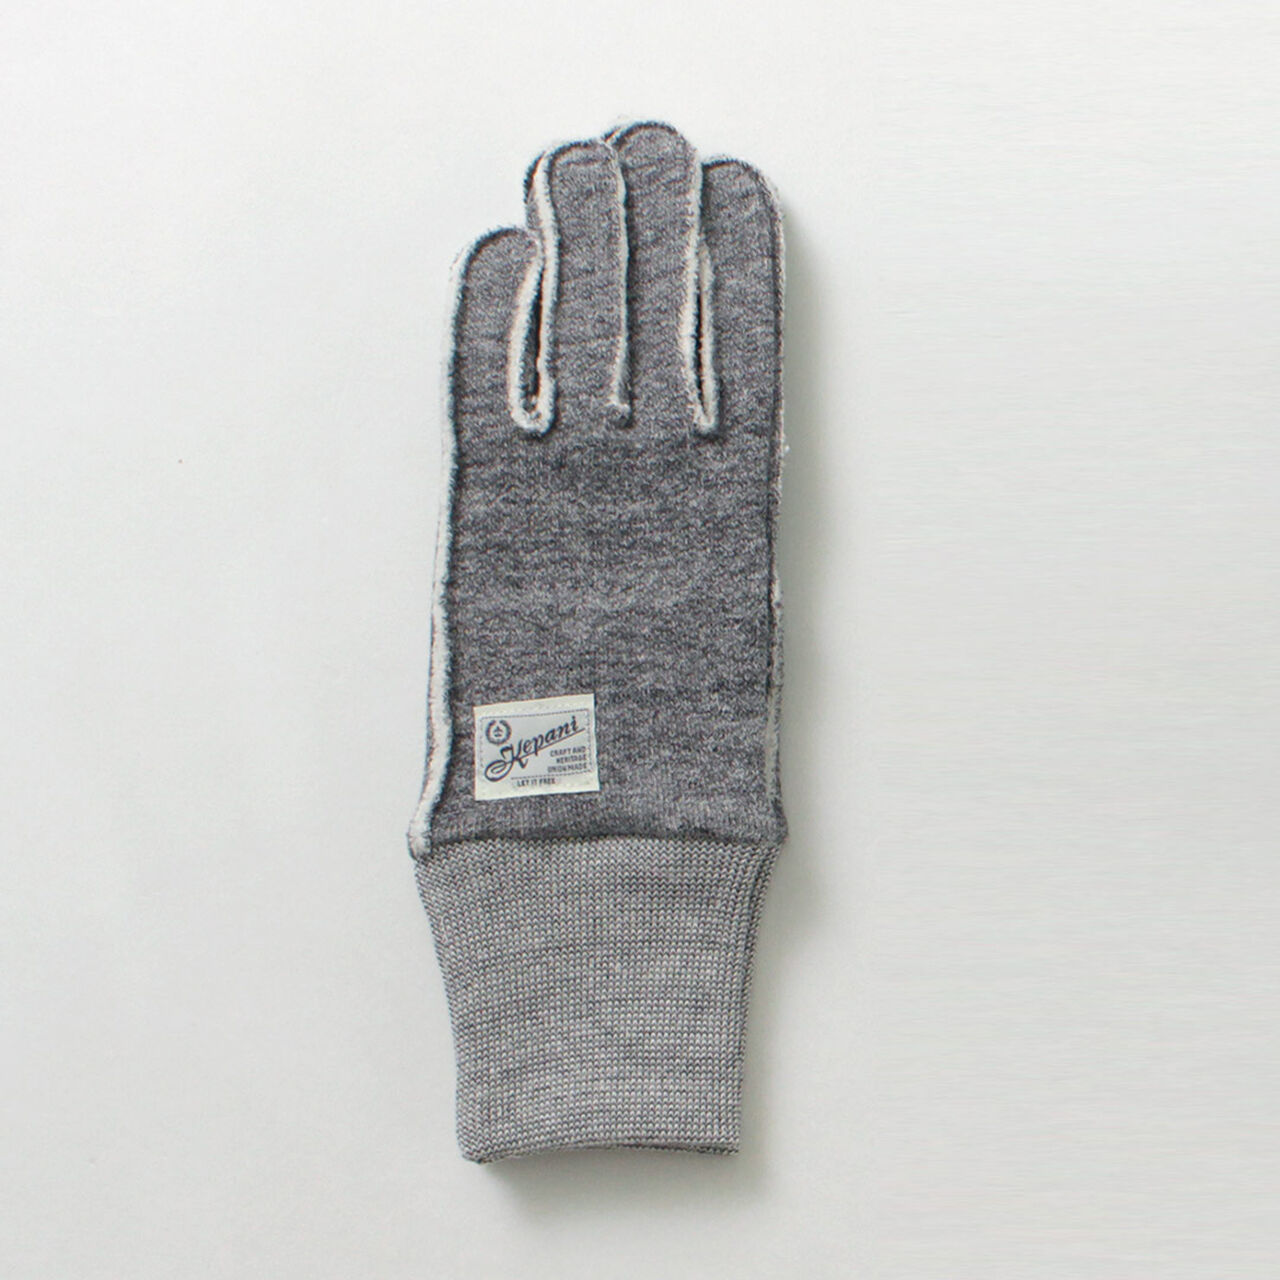 Raffy brushed-lining Sweat Gloves,Grey, large image number 0